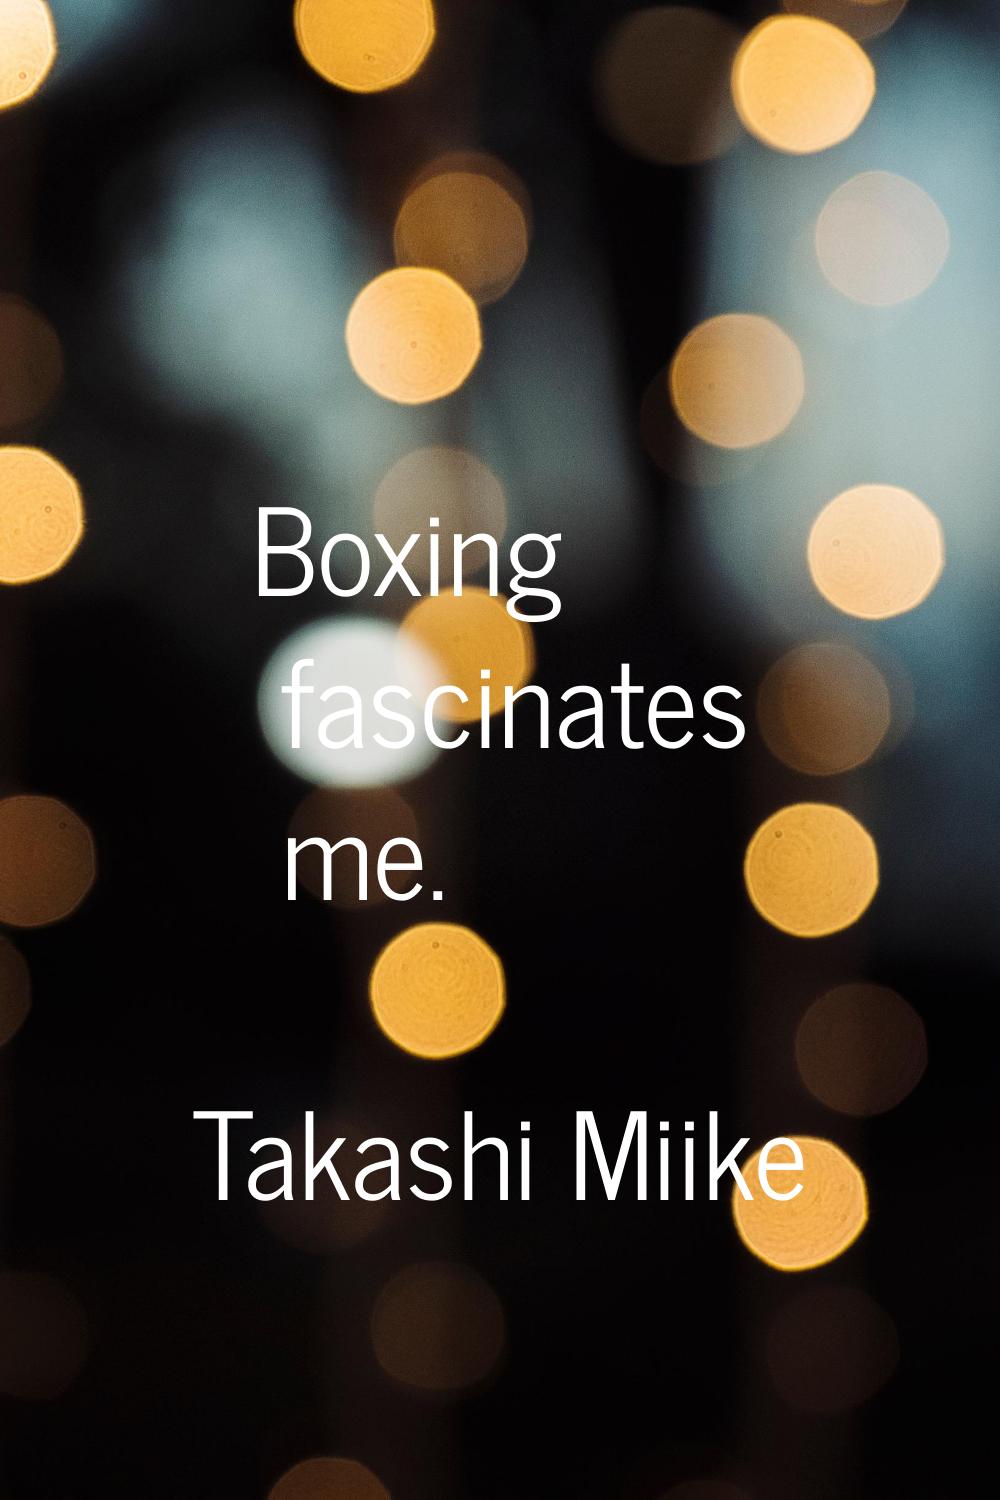 Boxing fascinates me.